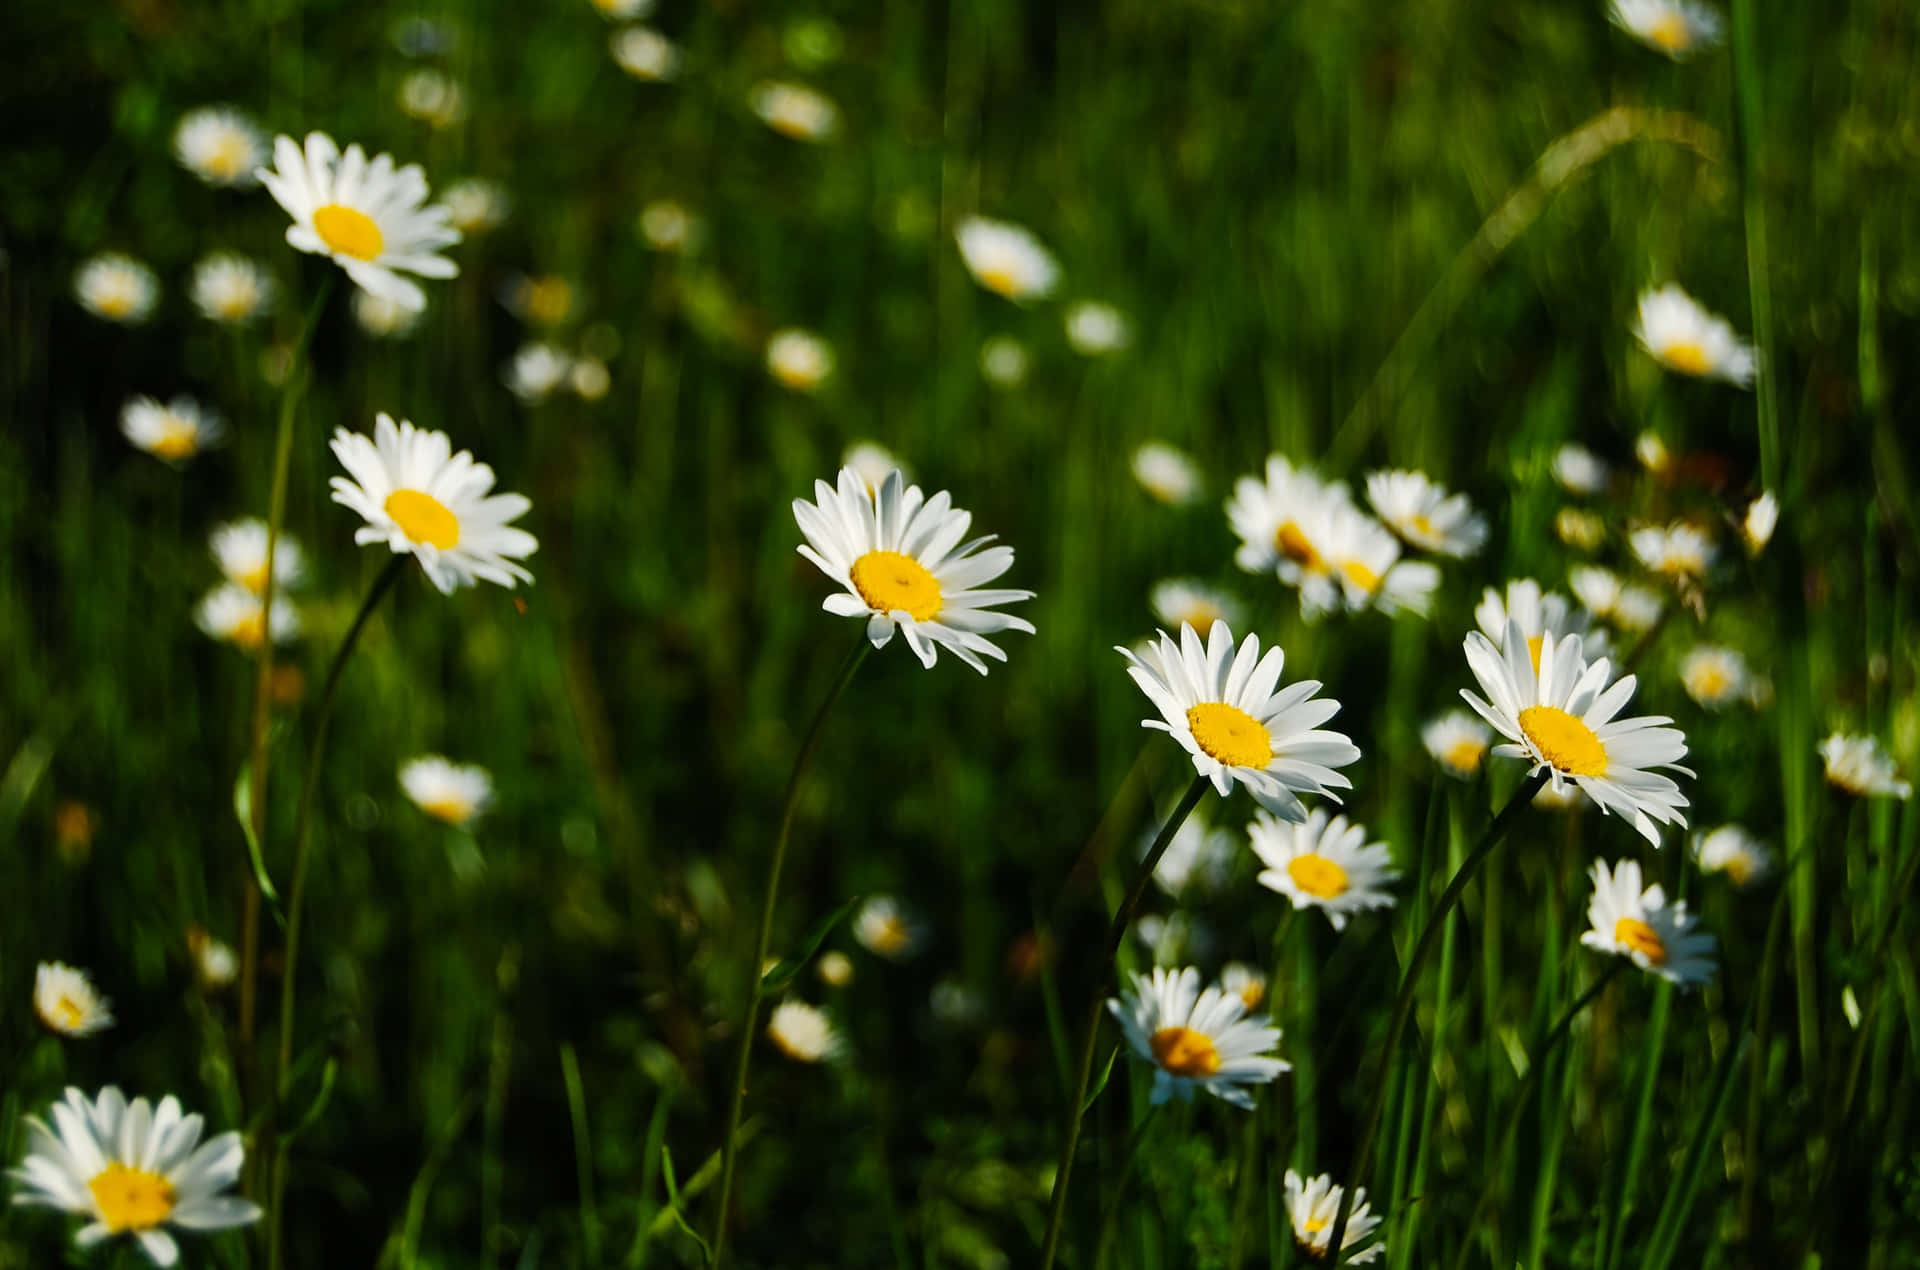 A single daisy on a green field